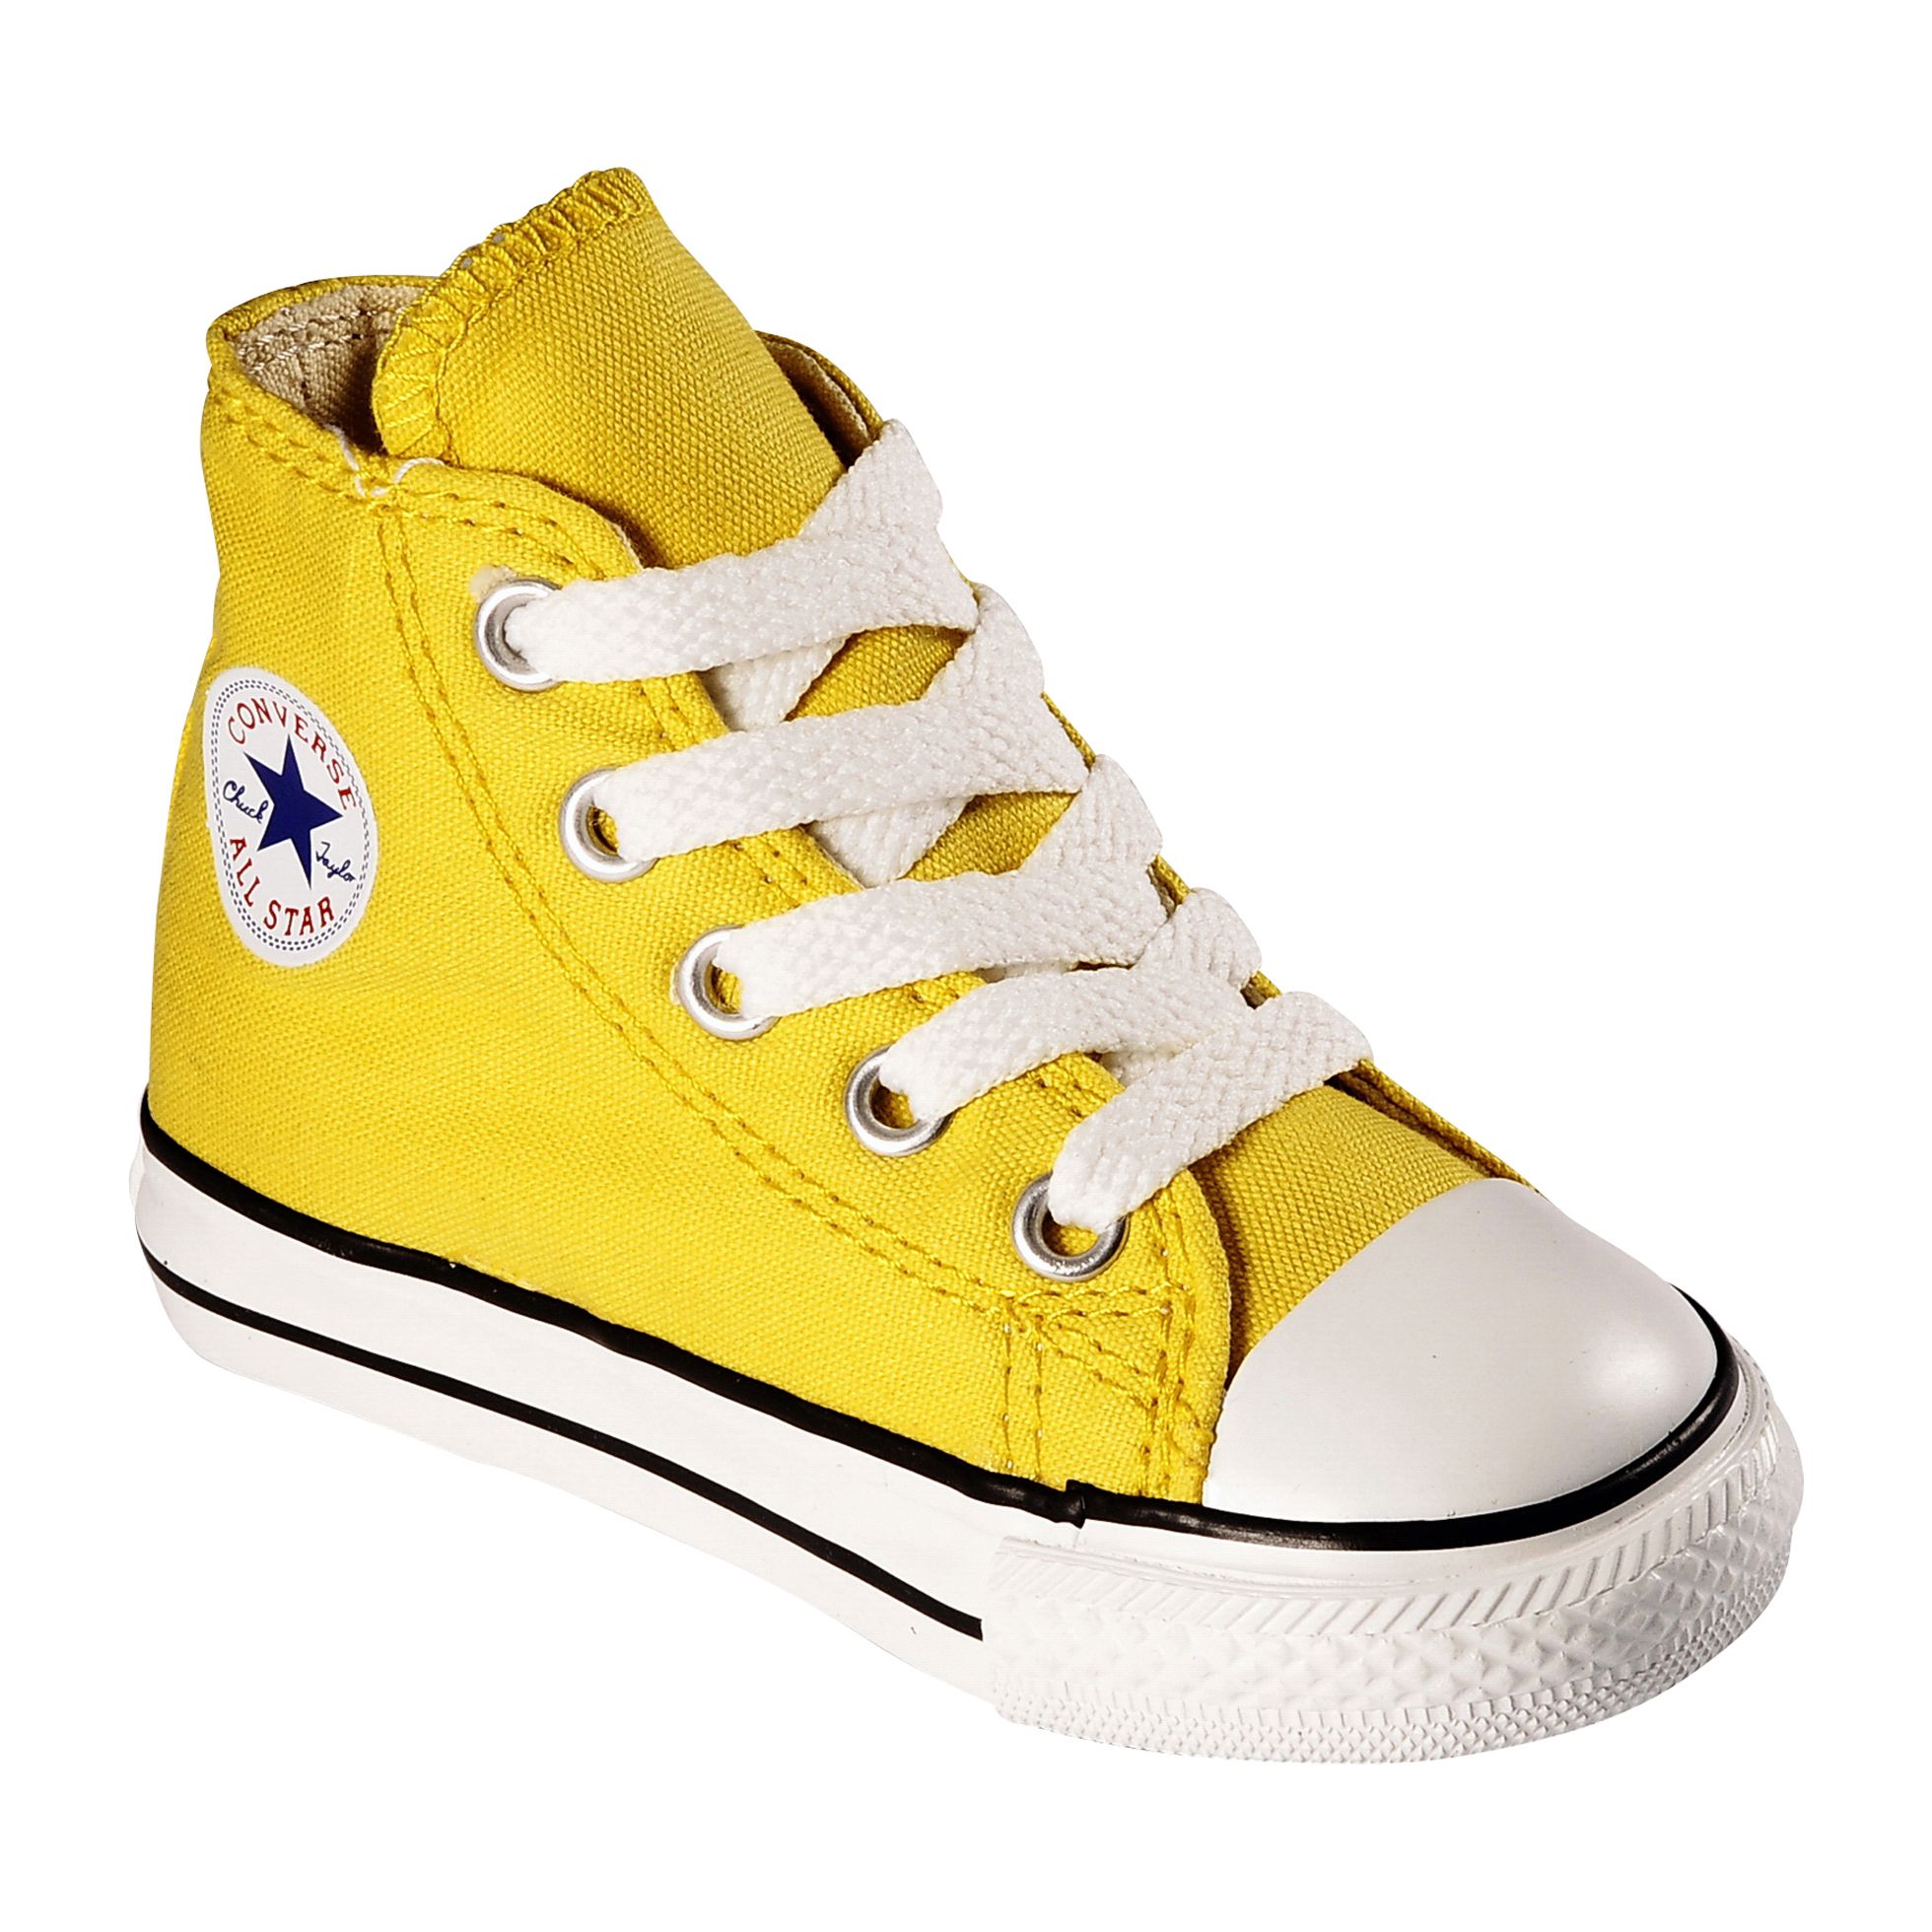 yellow high top converse toddler